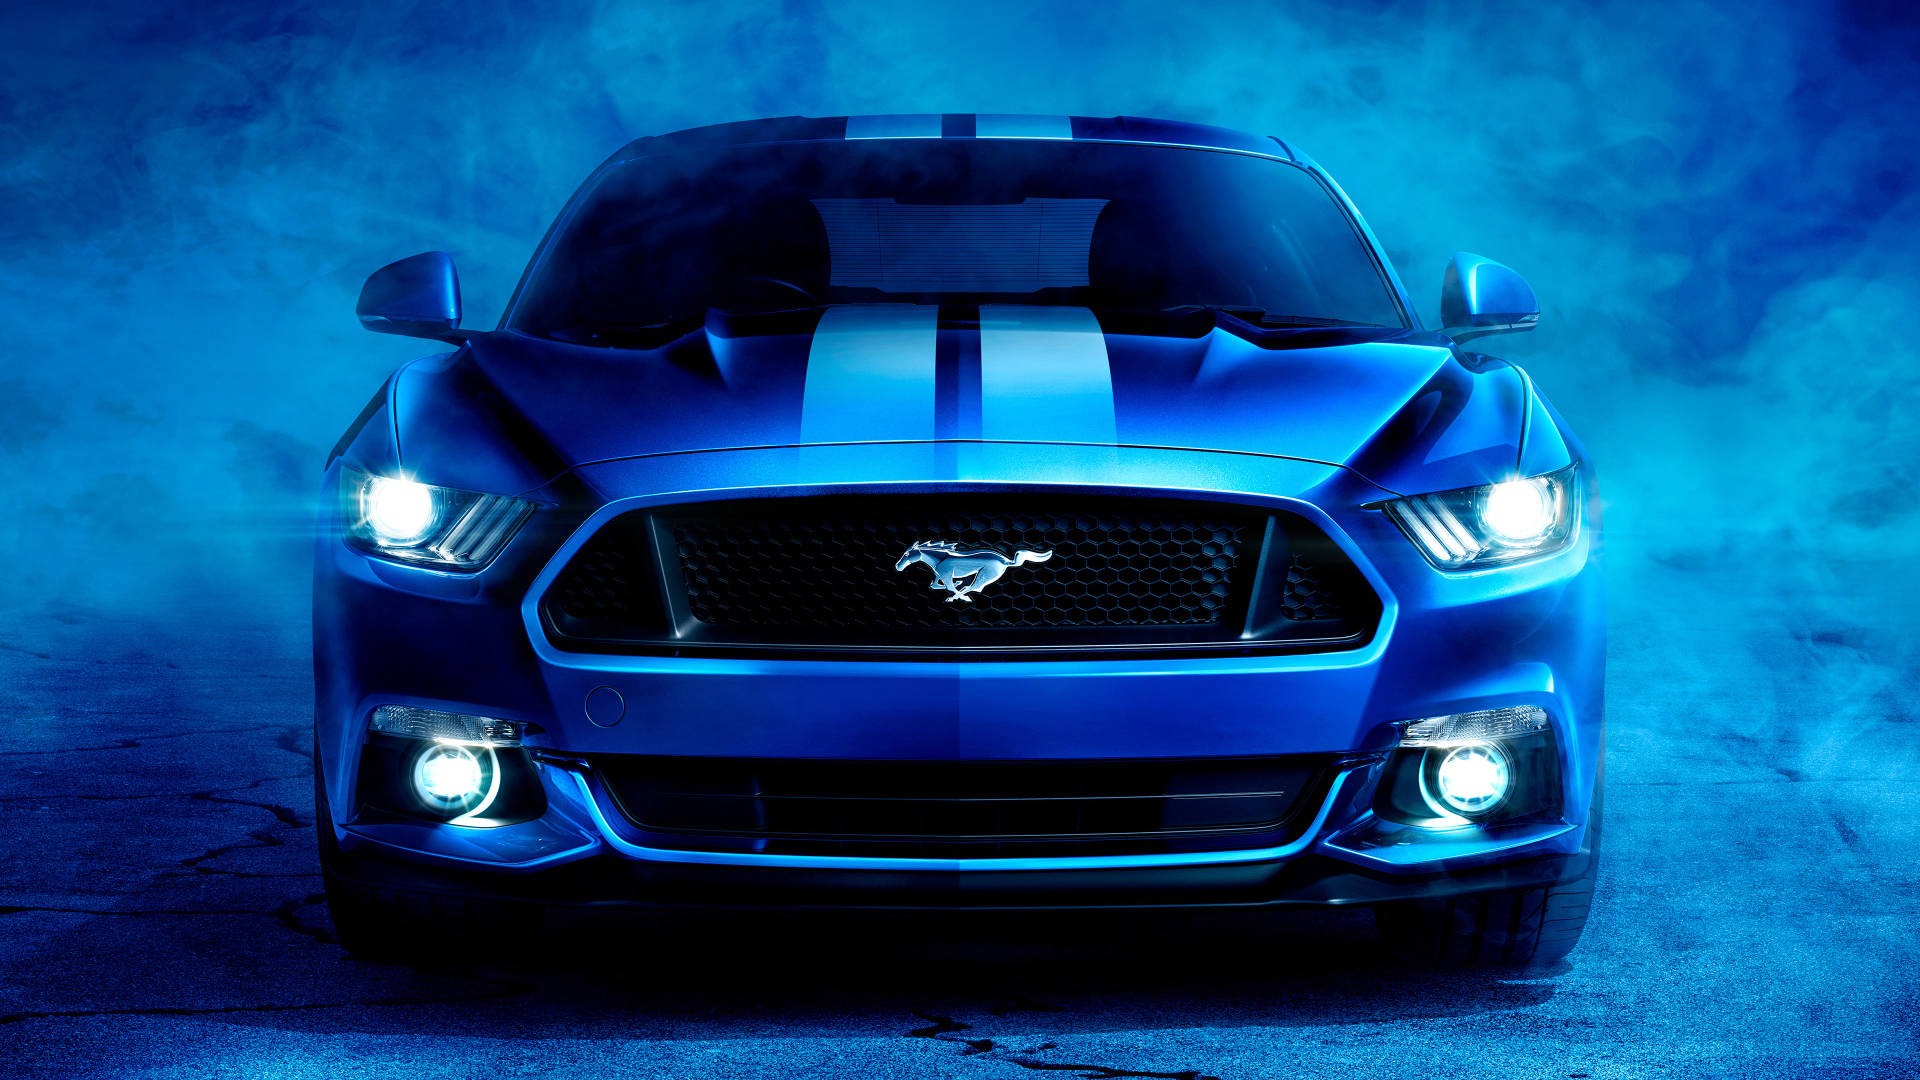 Blue Smoke Surrounding Ford Mustang HD Wallpaper